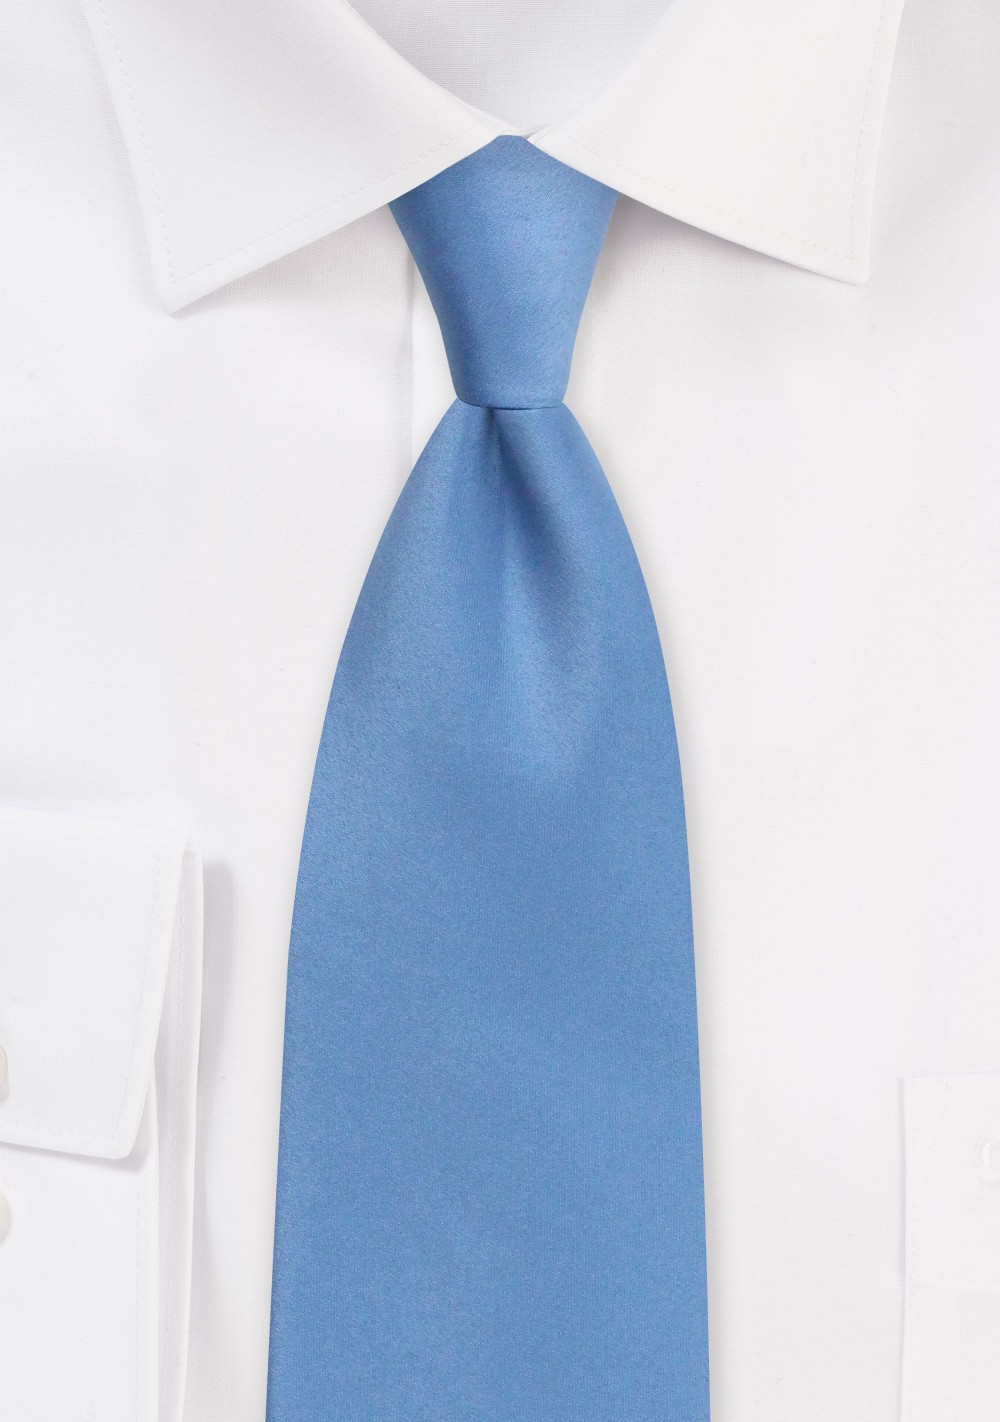 Satin Tie in Steel Blue